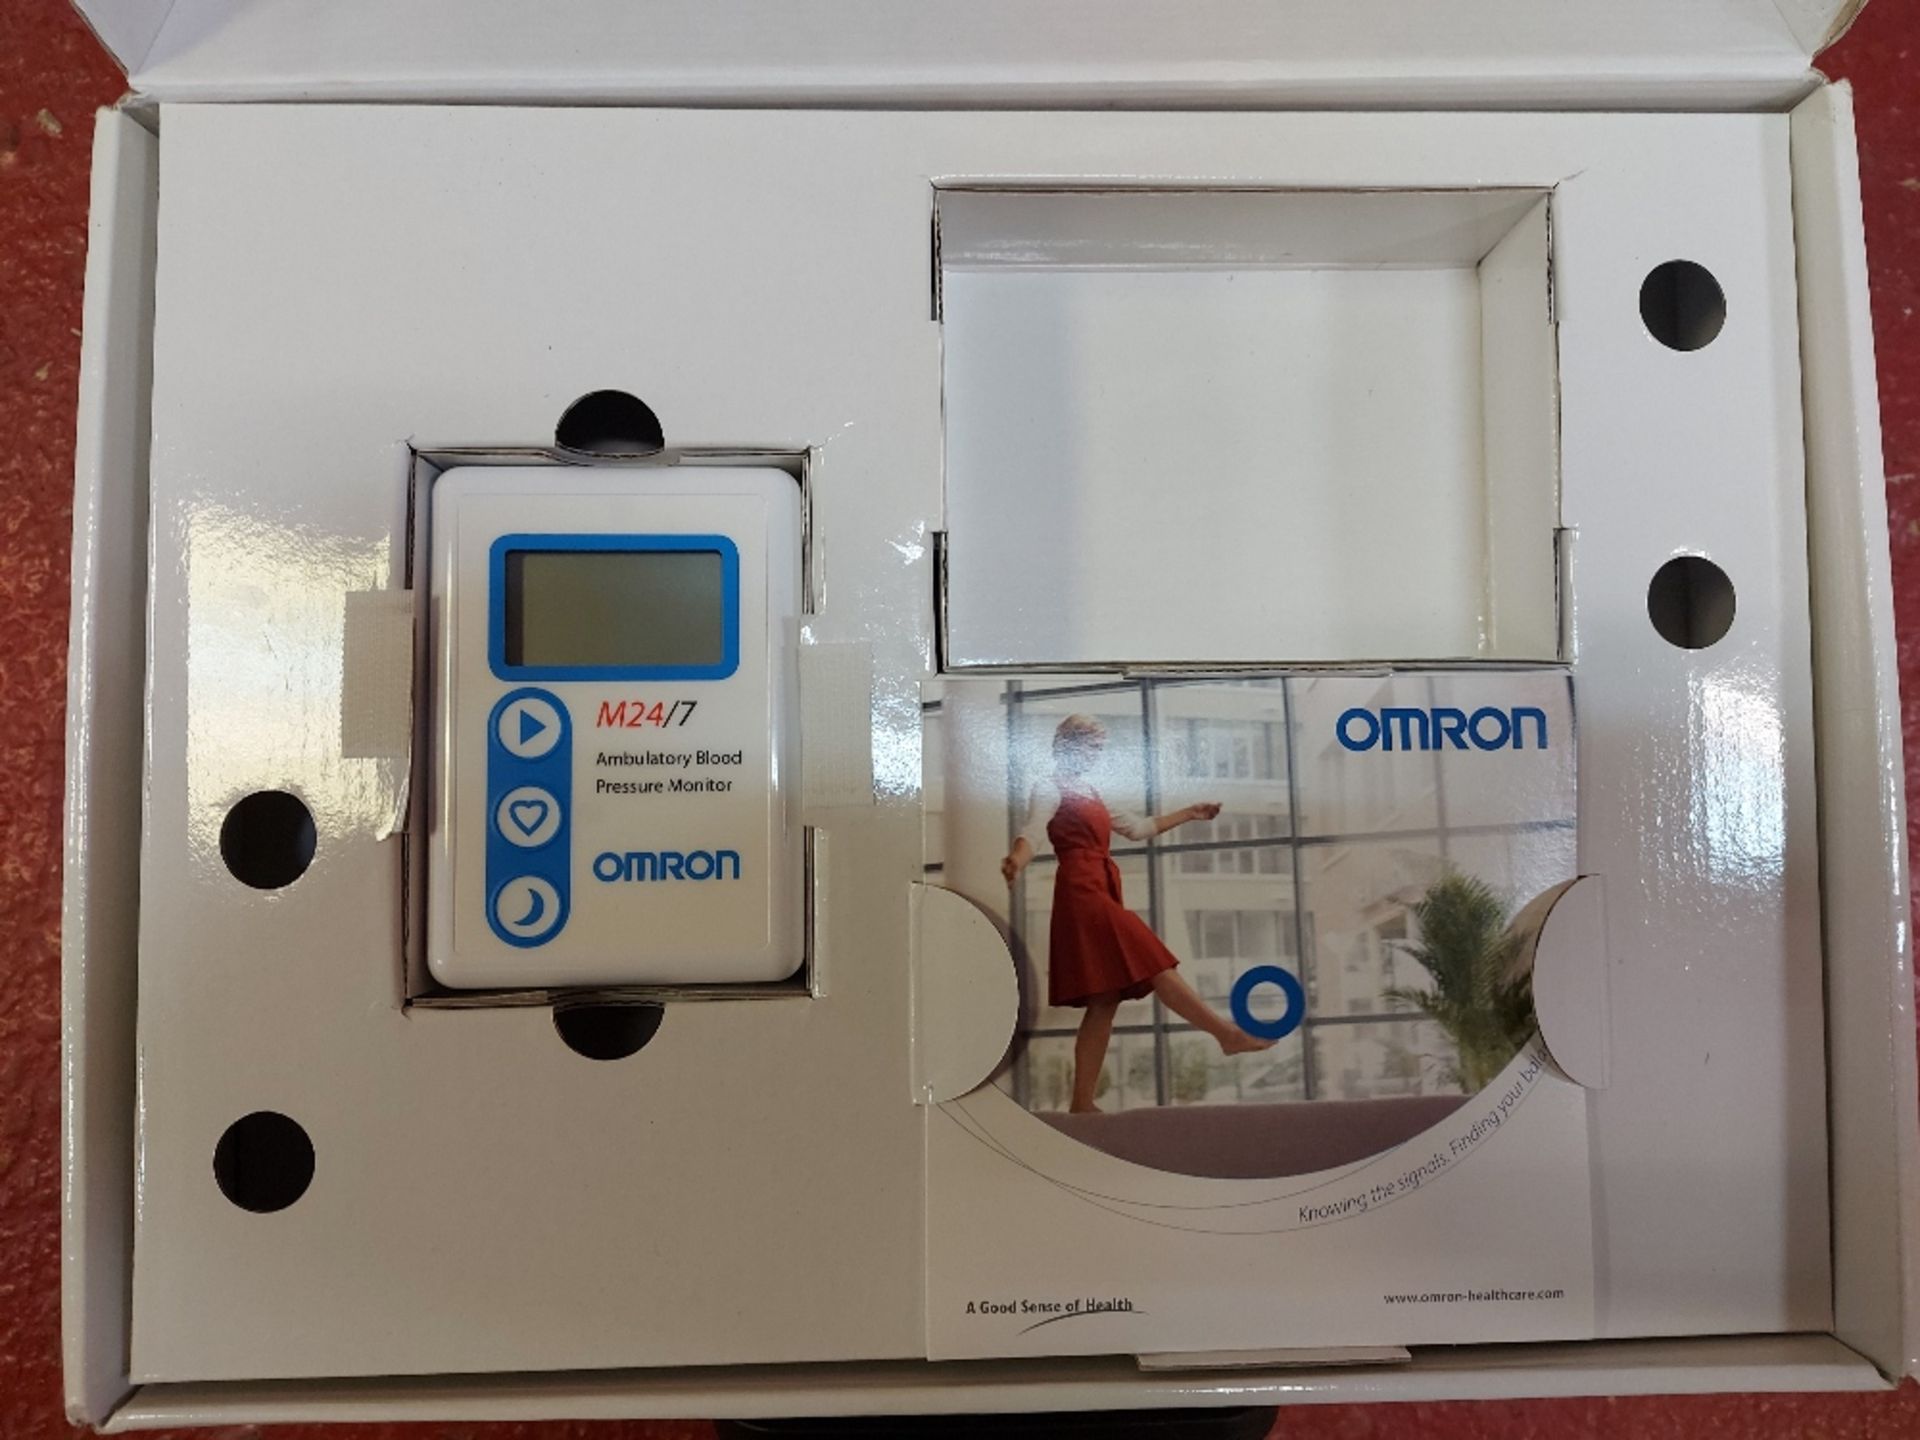 Omron M24/7 Ambulatory Blood Pressure Monitor